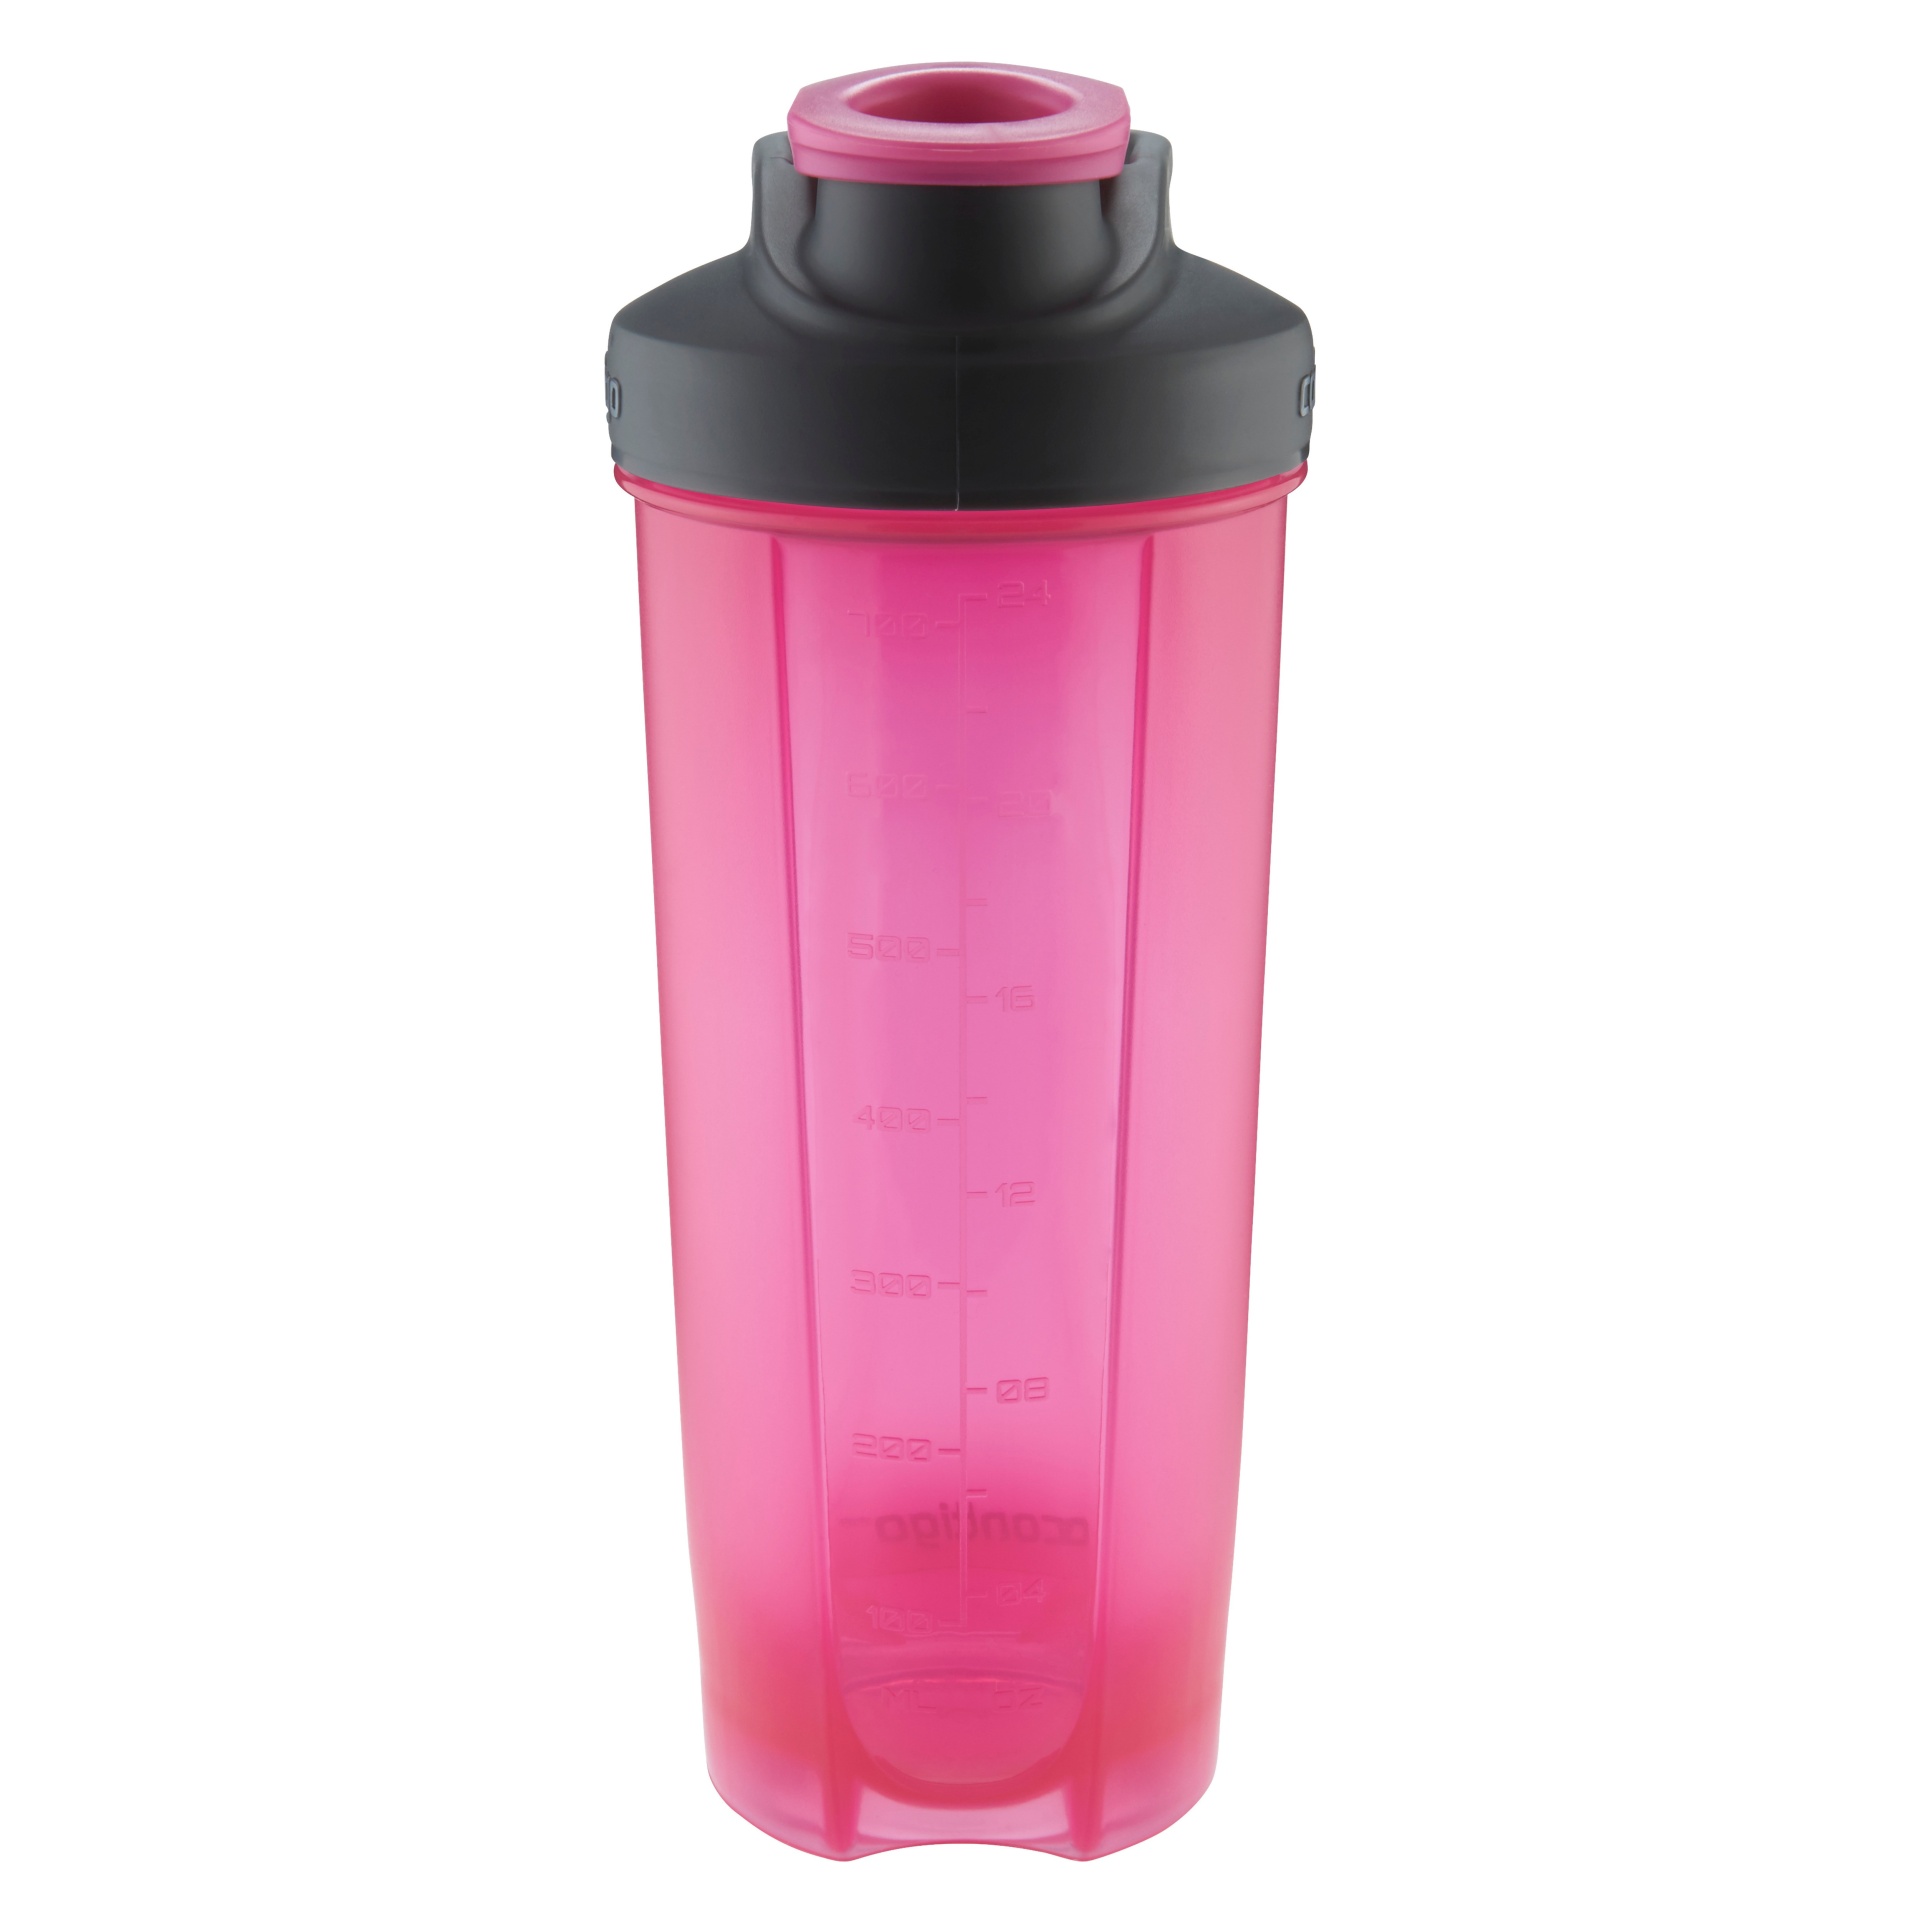 Contigo Stainless Steel Water Bottle - Pink, 1 ct - Harris Teeter